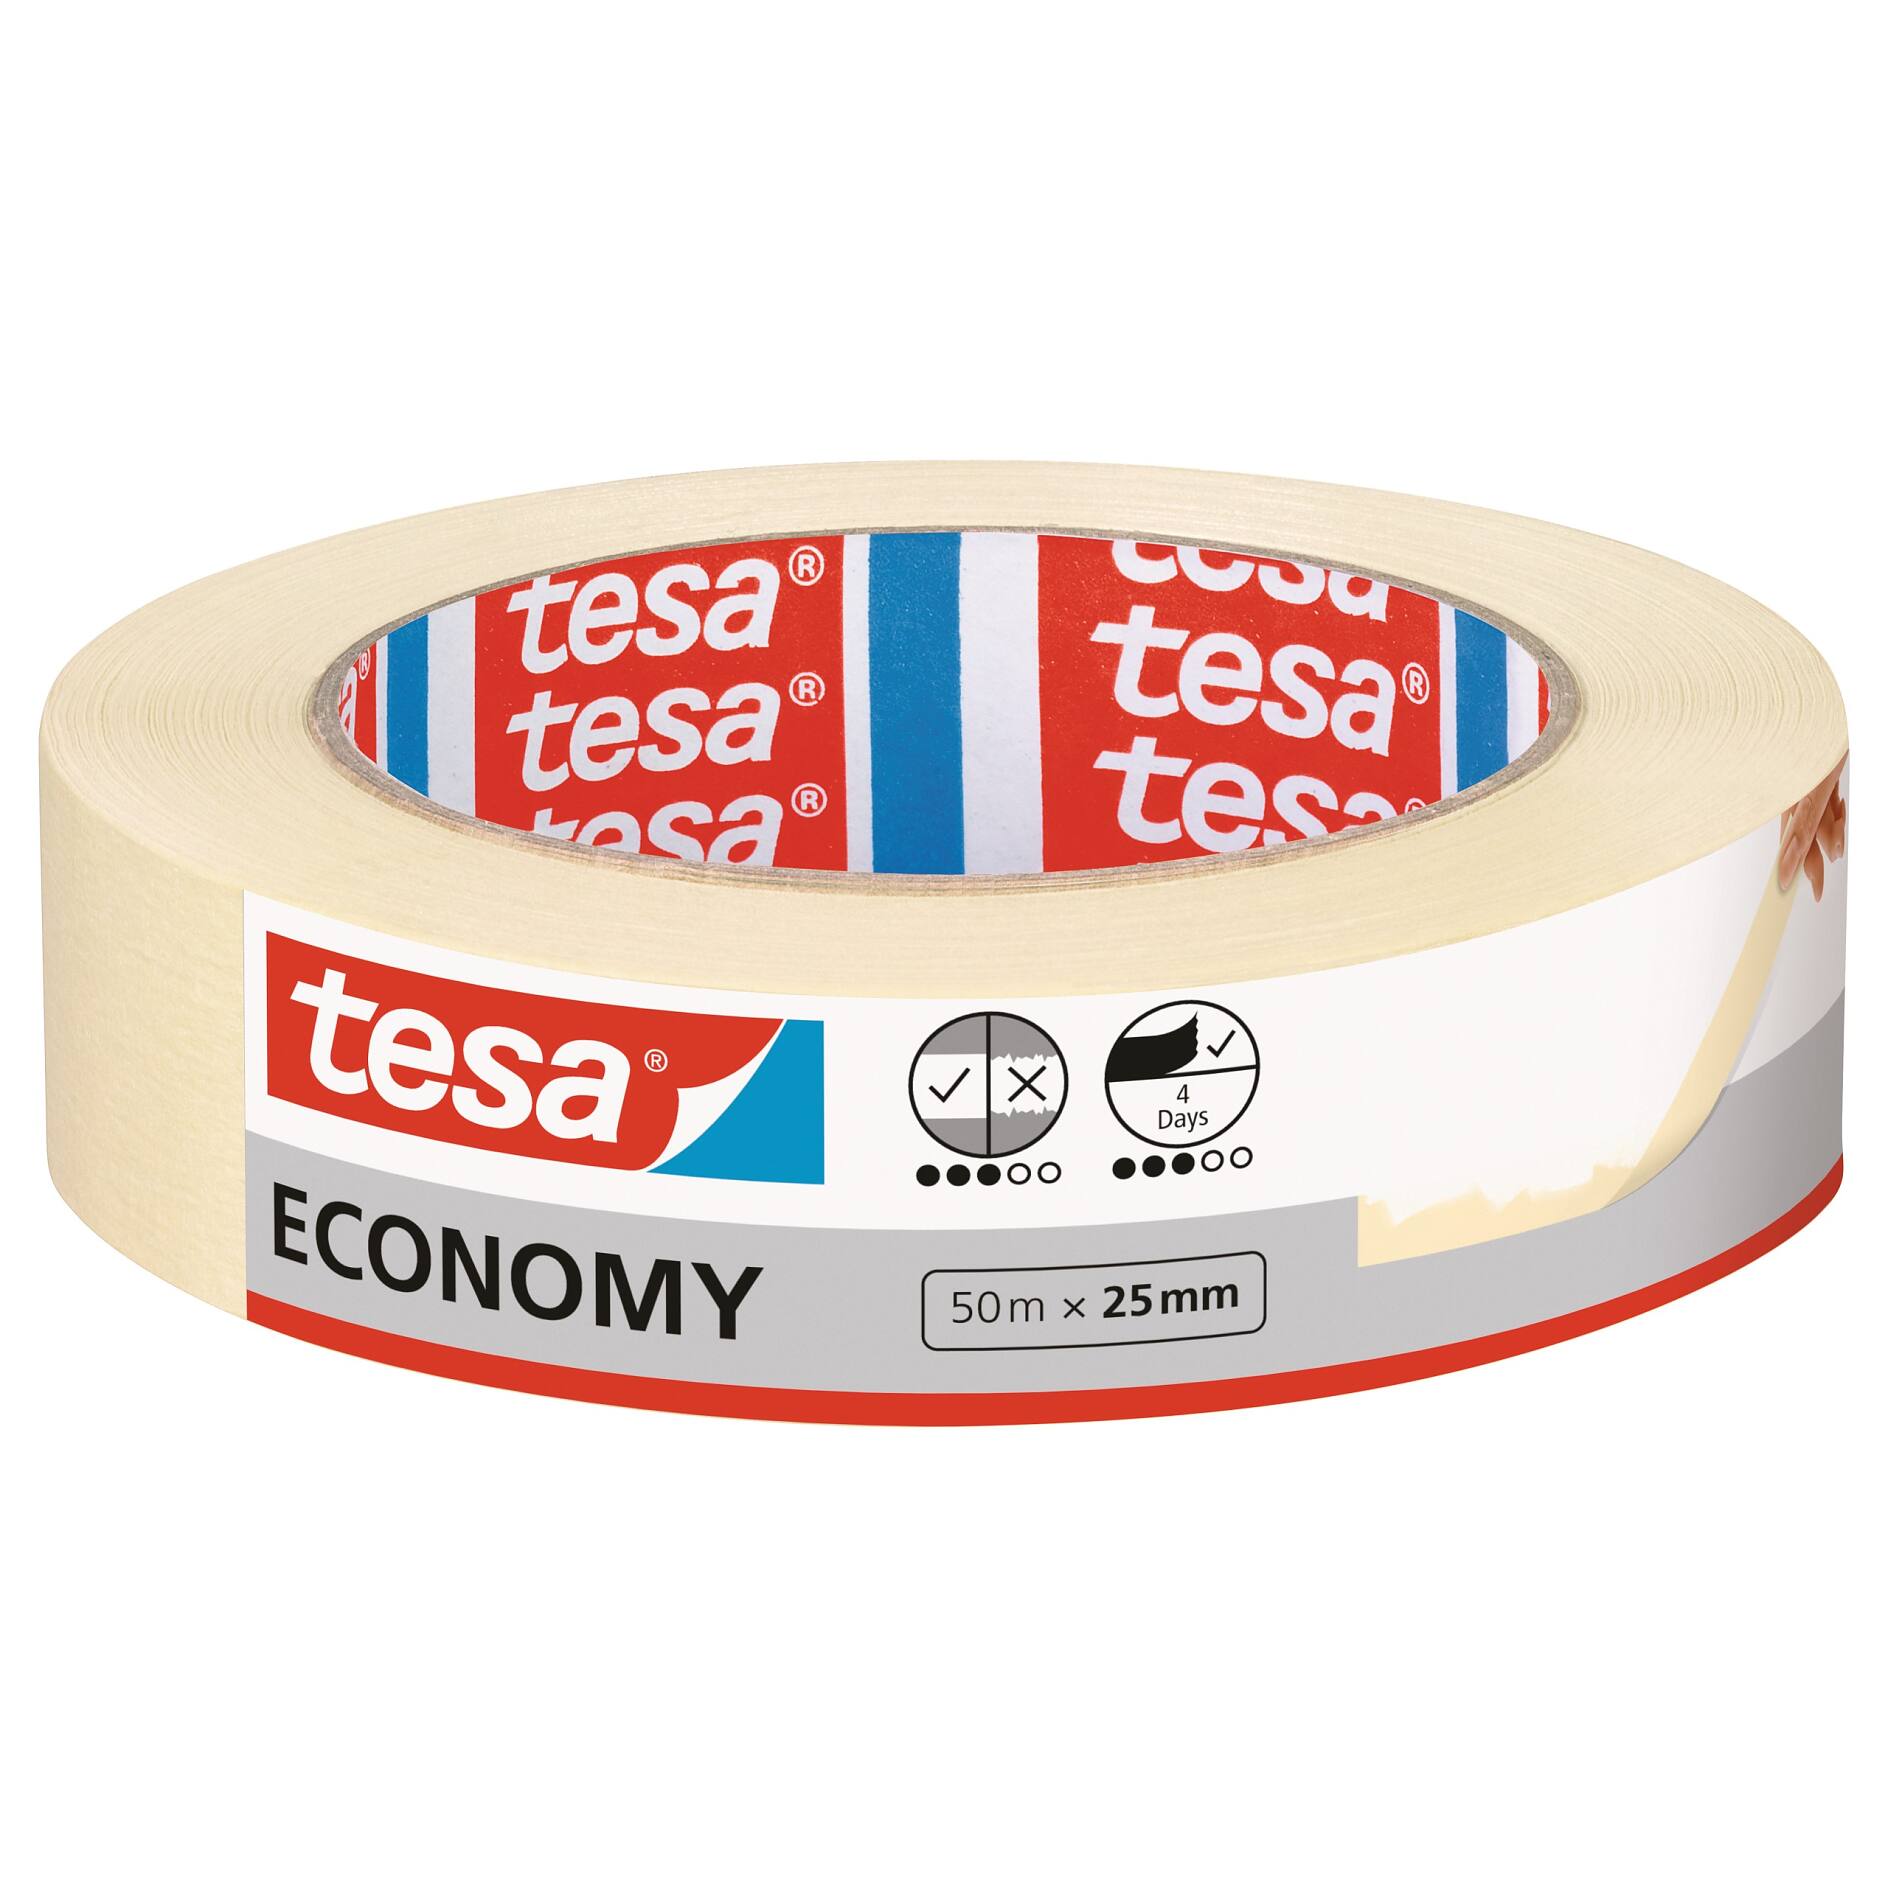 Buy tesa SPVC EMBOSSED 67001-00000-00 Plastering tape tesa